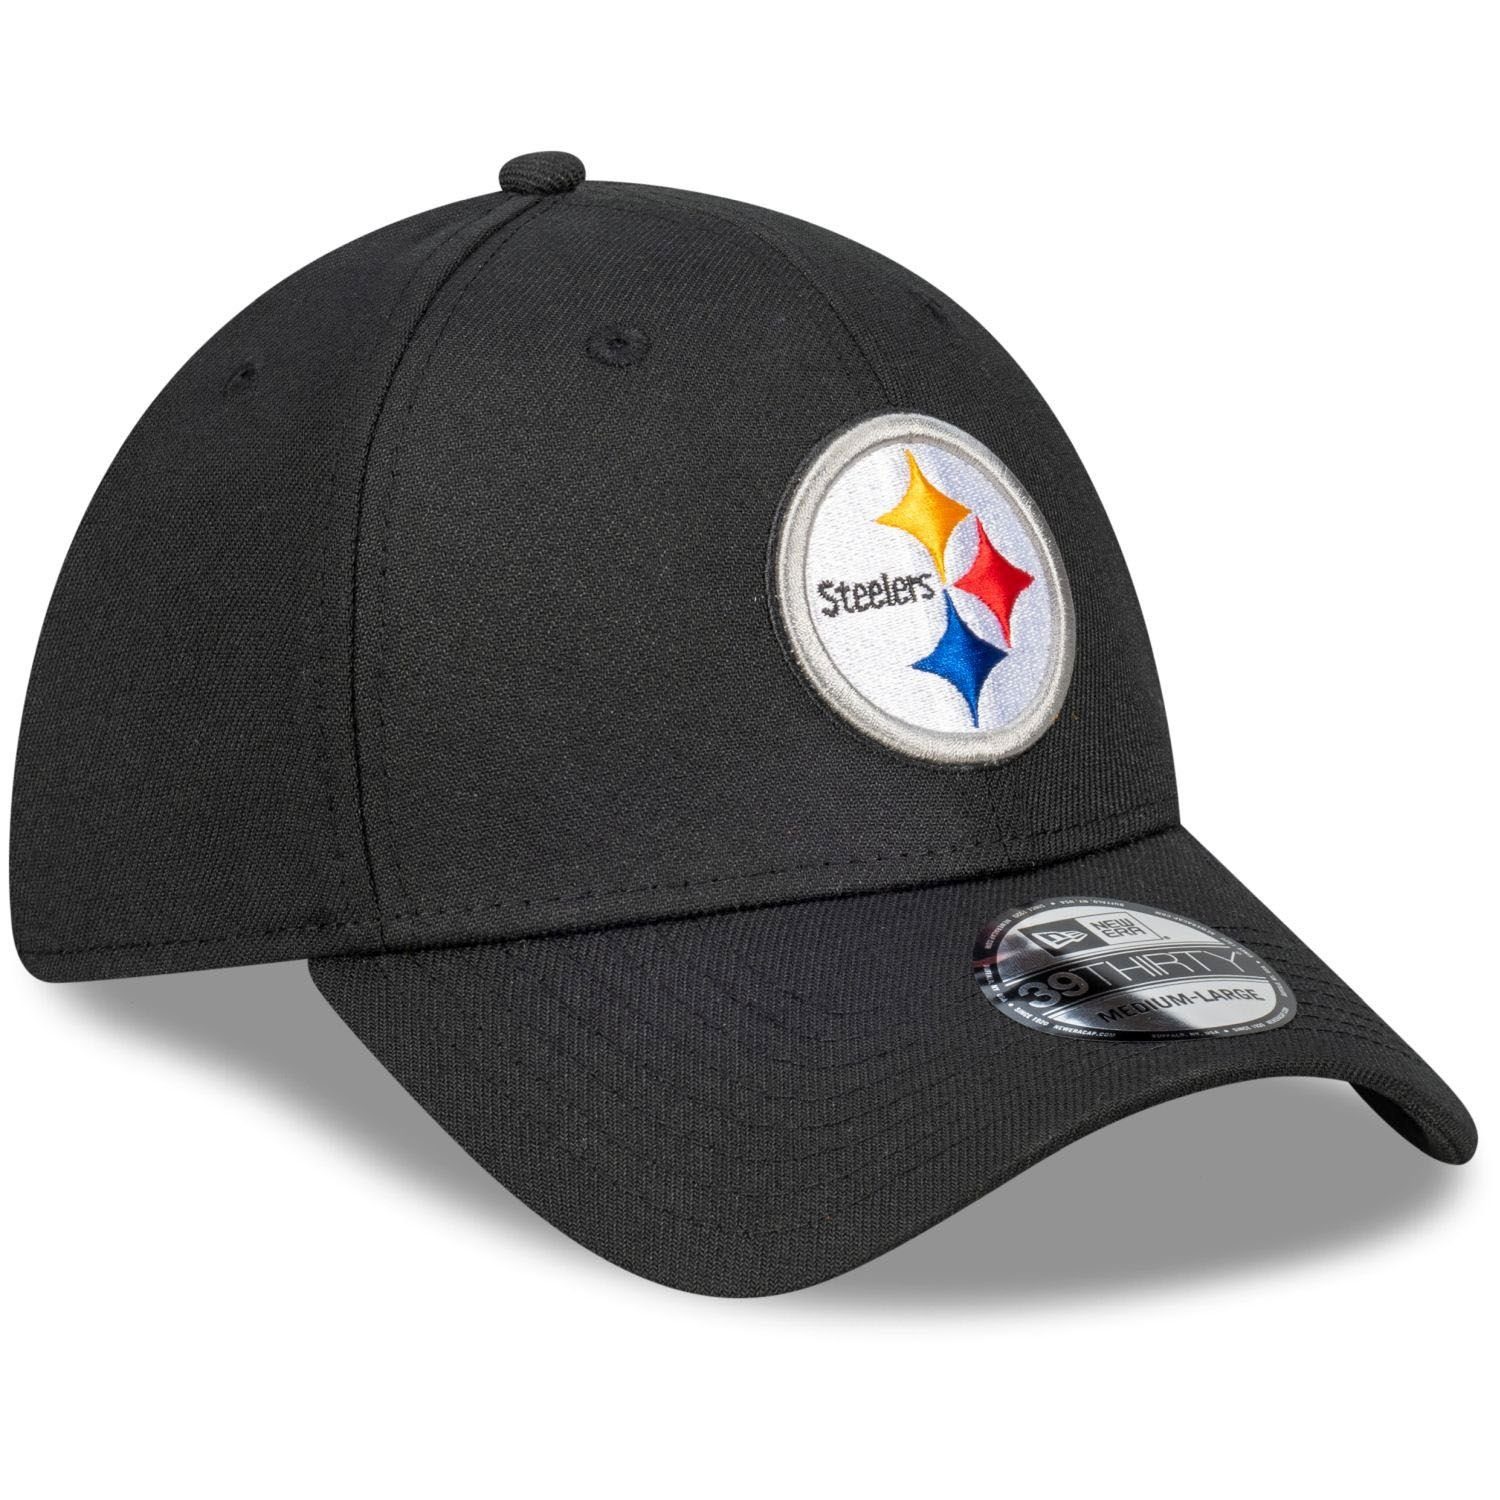 New Era Flex Cap Steelers NFL Teams 39Thirty StretchFit Pittsburgh